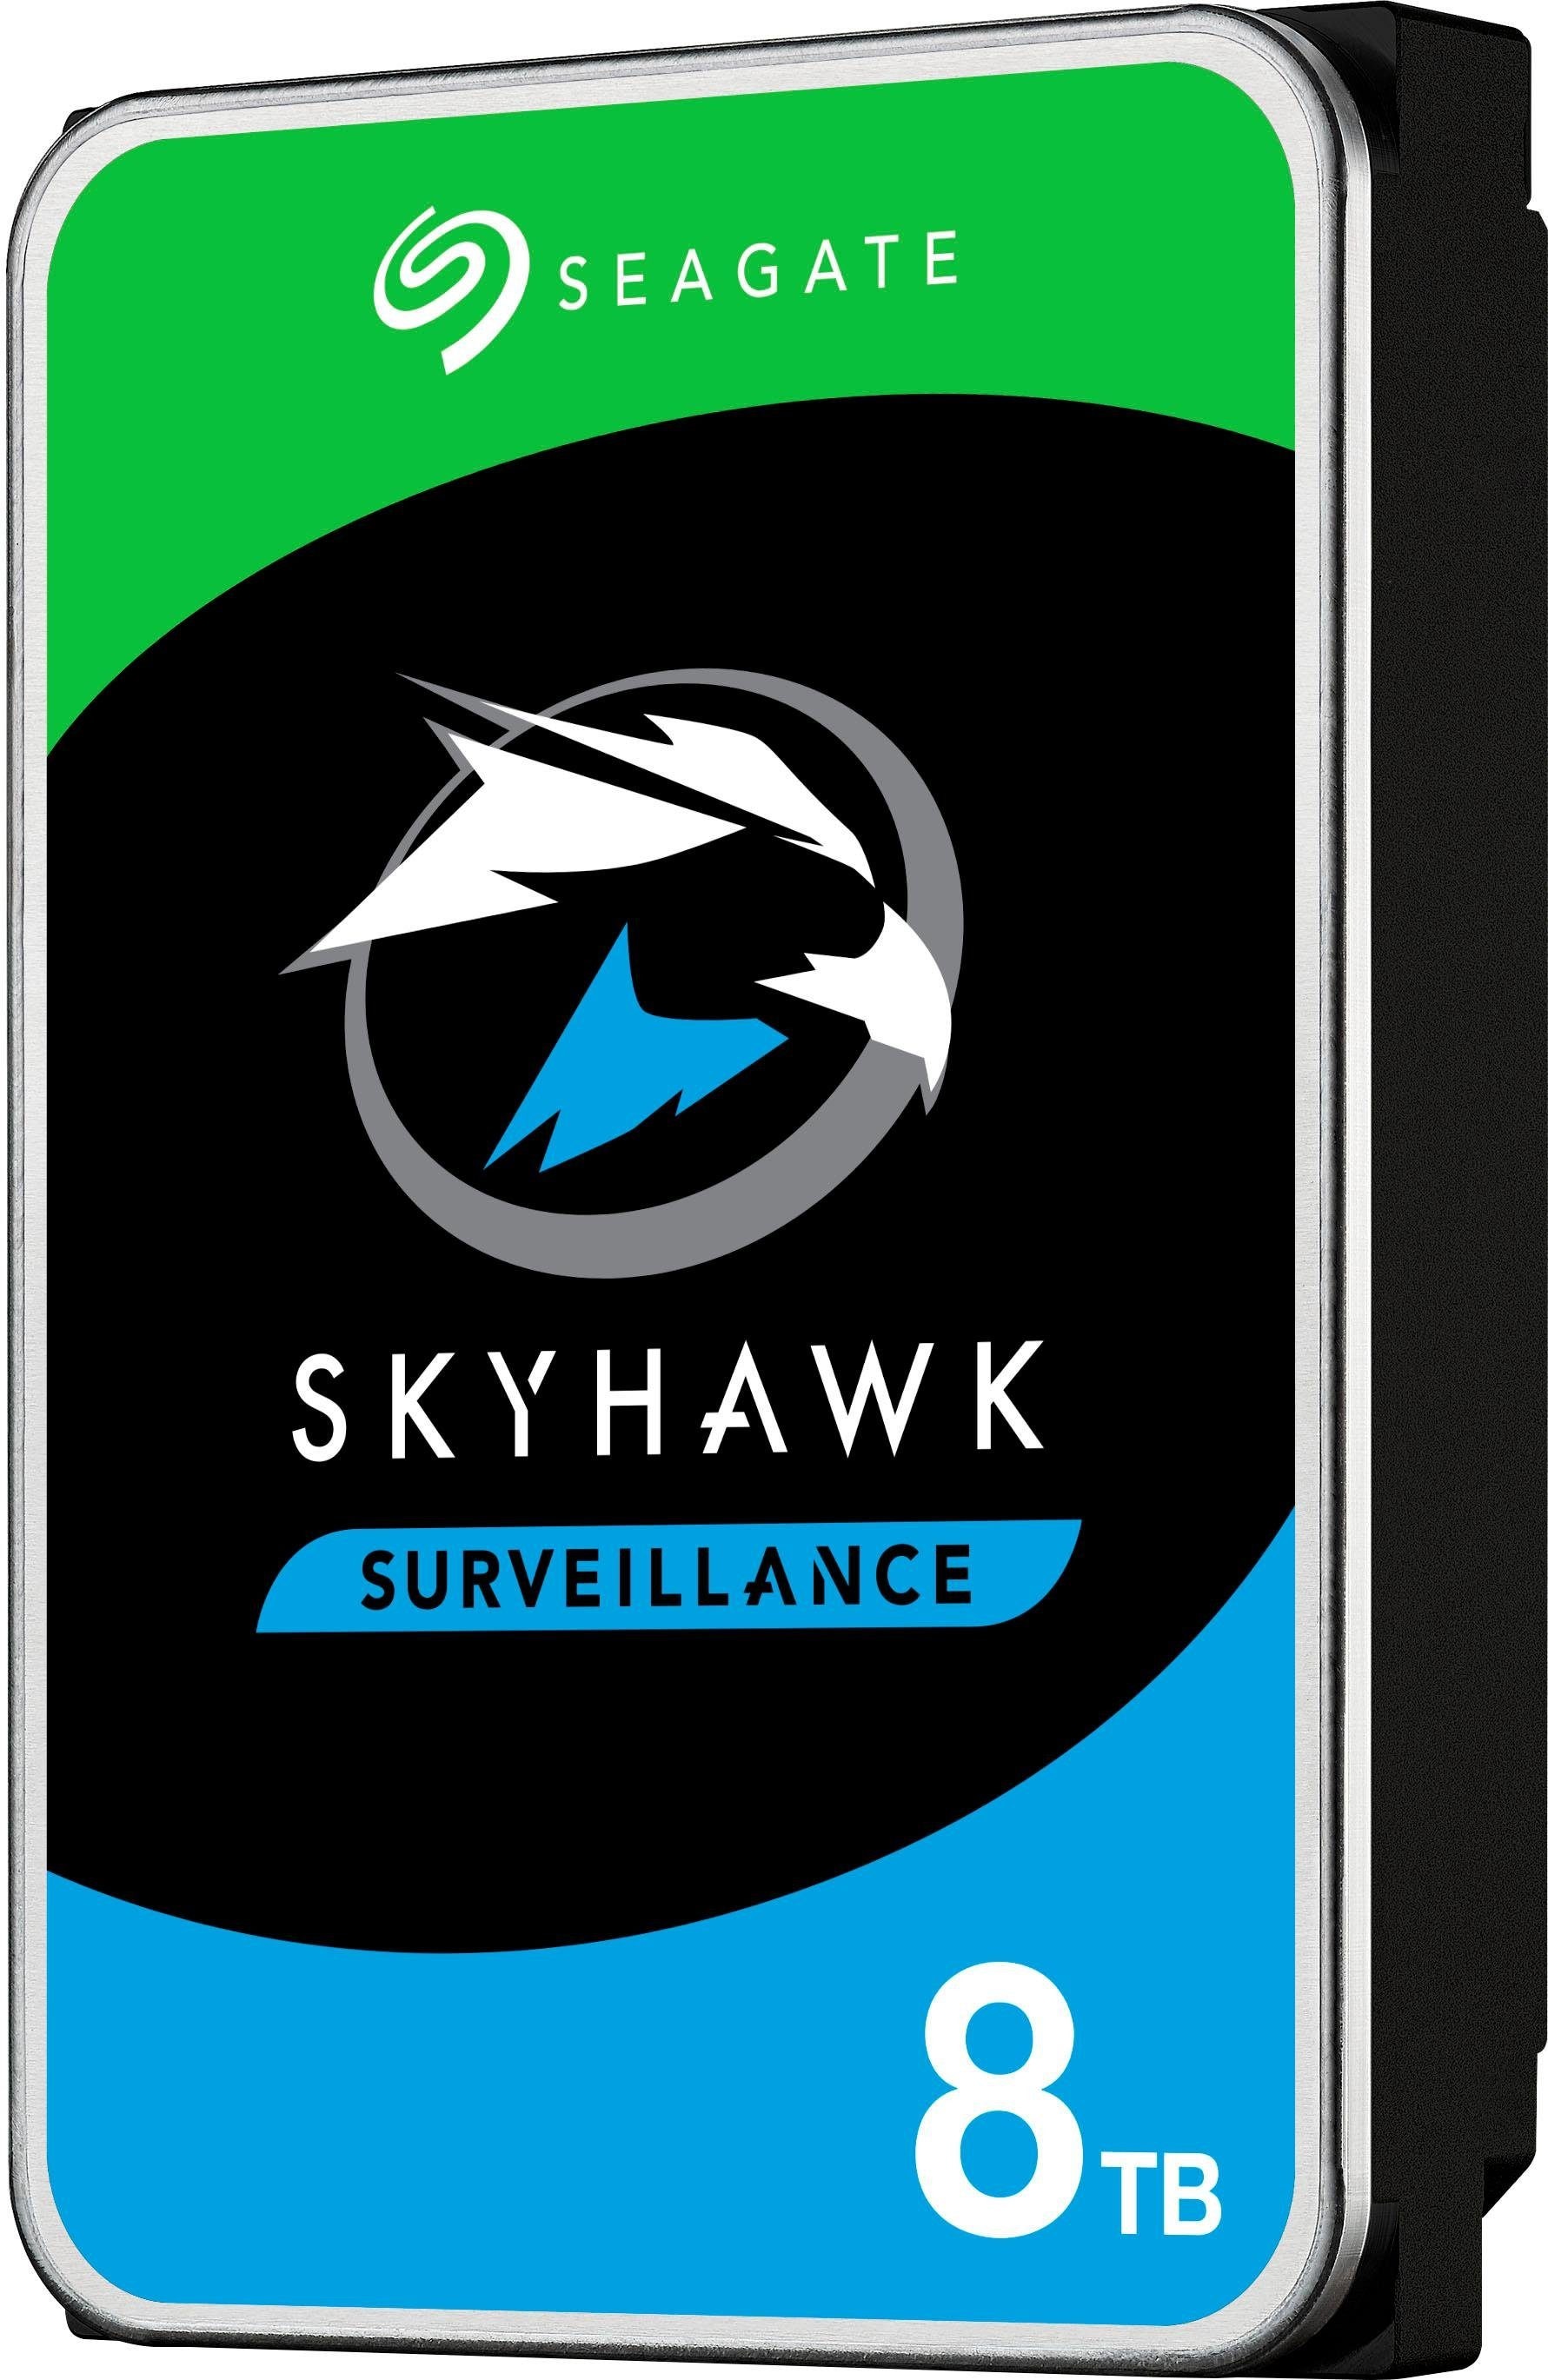 Seagate HDD-Festplatte »SkyHawk«, 3,5 Zoll, Anschluss SATA III, Bulk, inkl. 3 Jahre Rescue Data Recovery Services